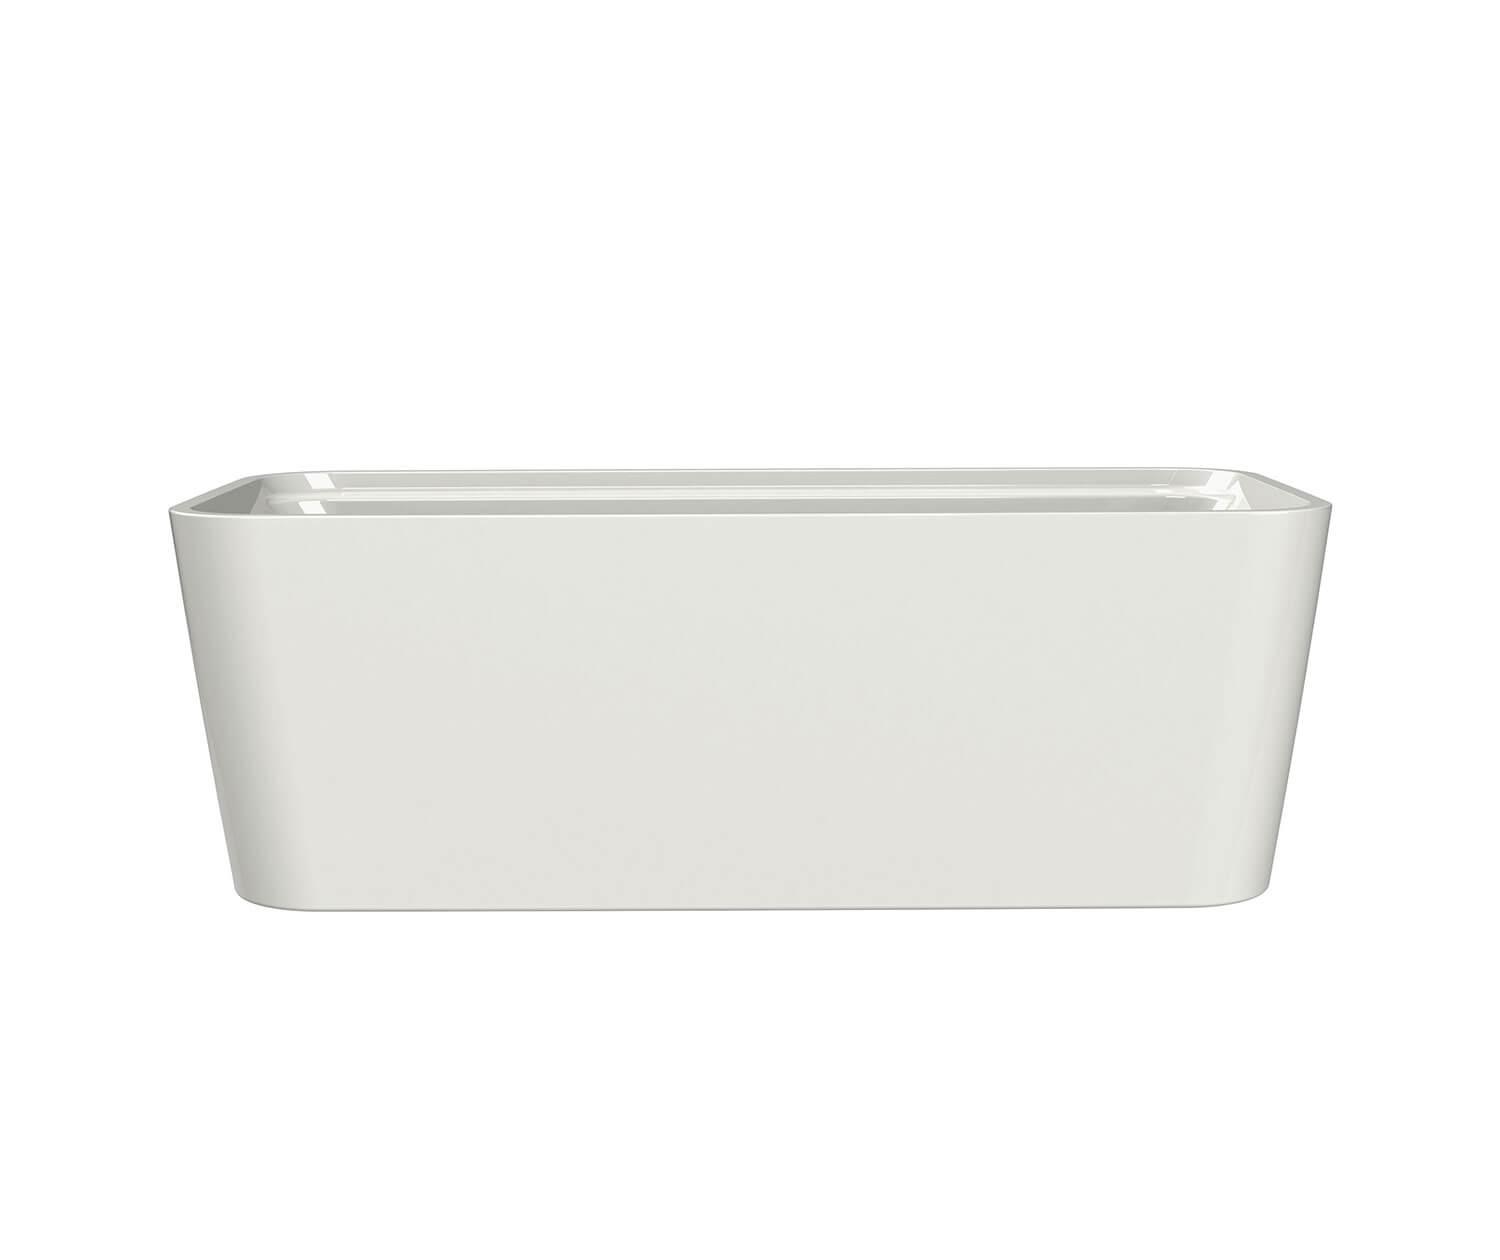 Maax Oberto Acrylic Freestanding Center Drain Bathtub in White with White Skirt 106386 67 x 31 - Hbdepot